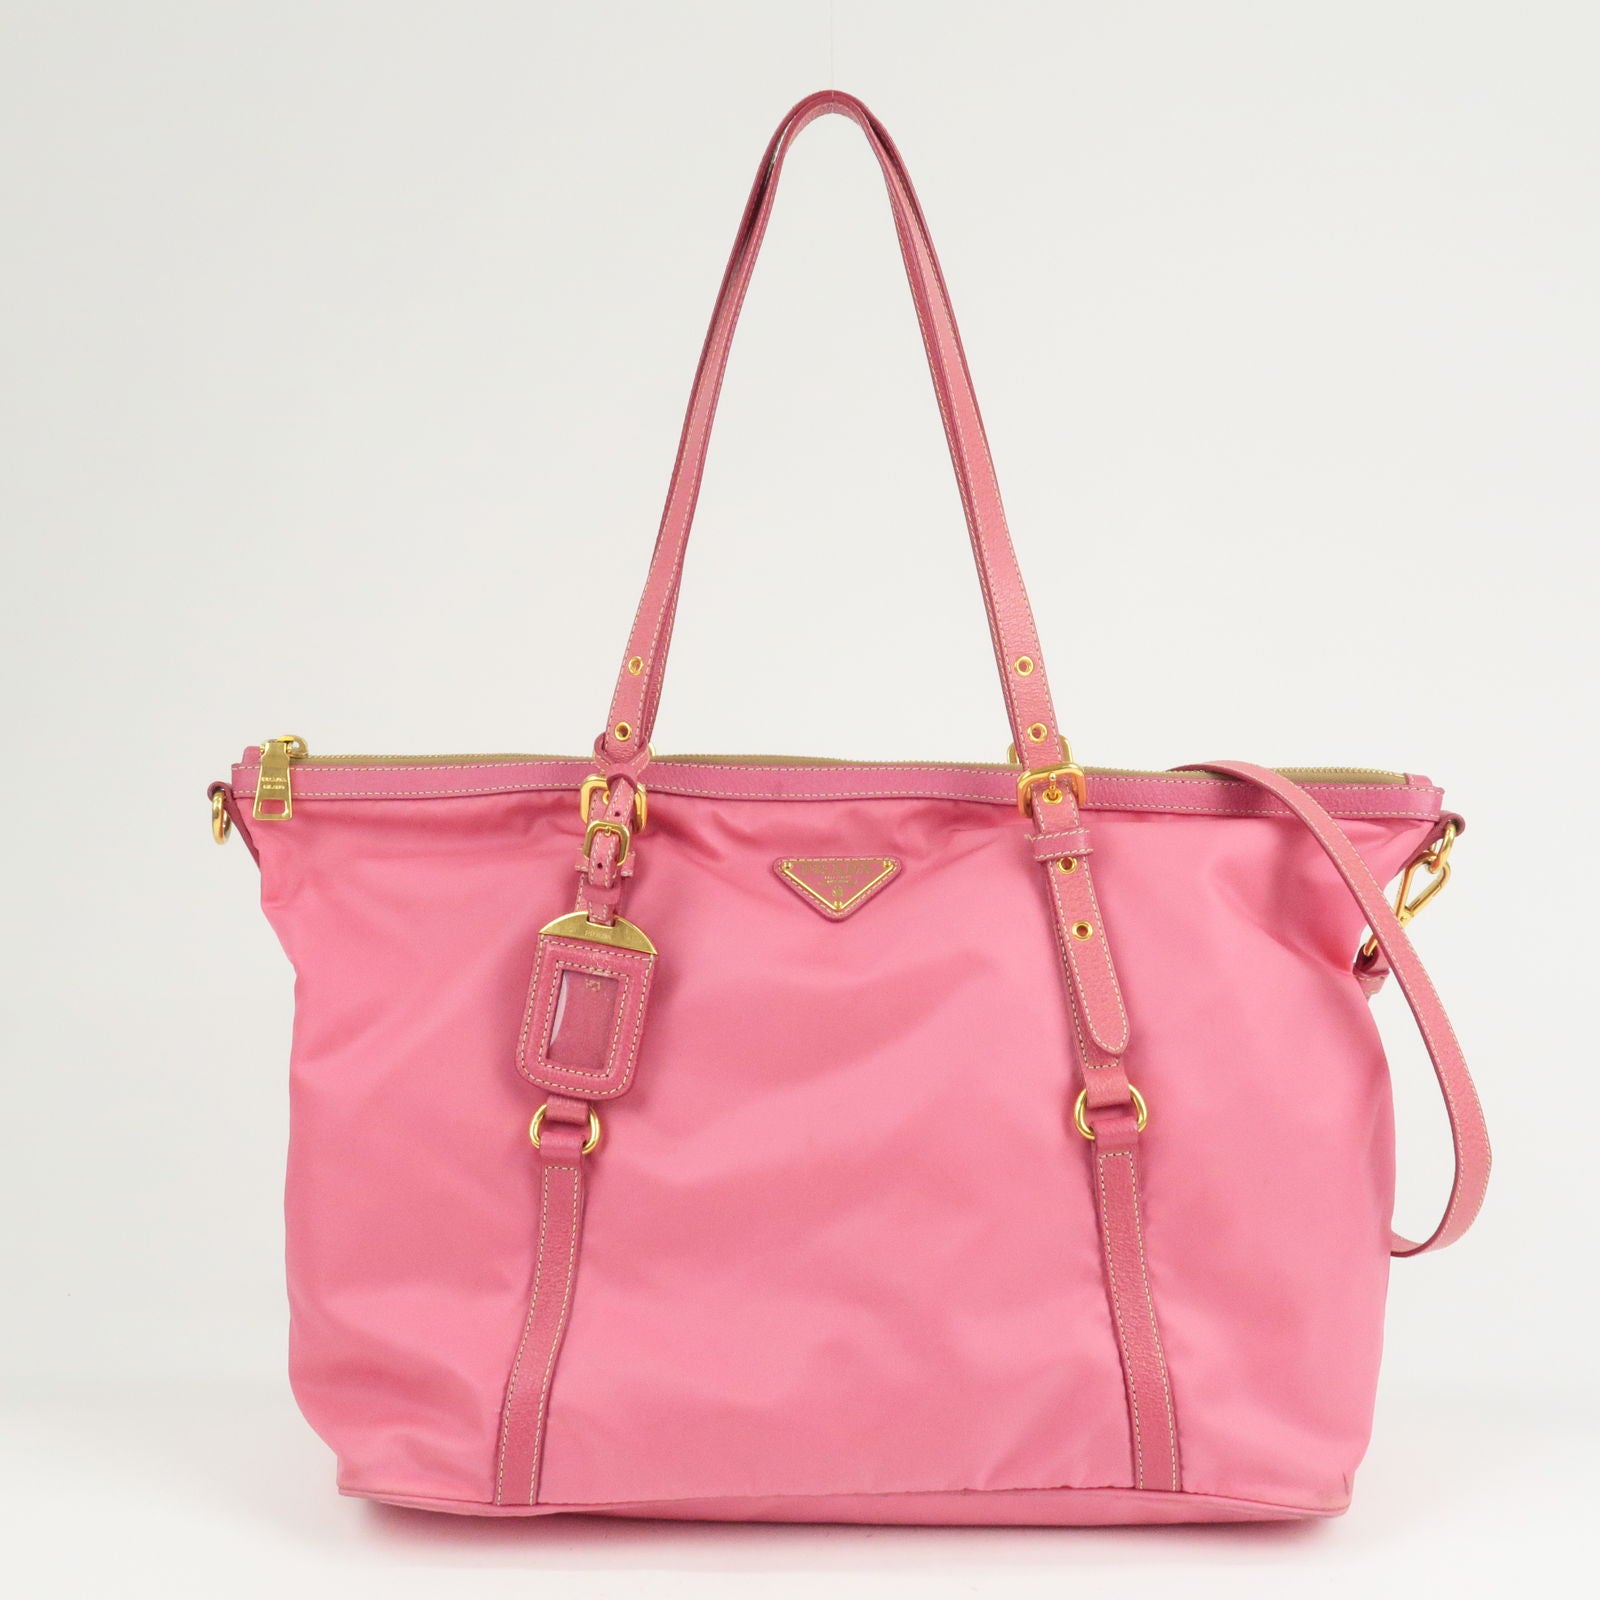 EUC! Prada Pink Authentic Dome Handbag Shoulder Bag Leather Purse